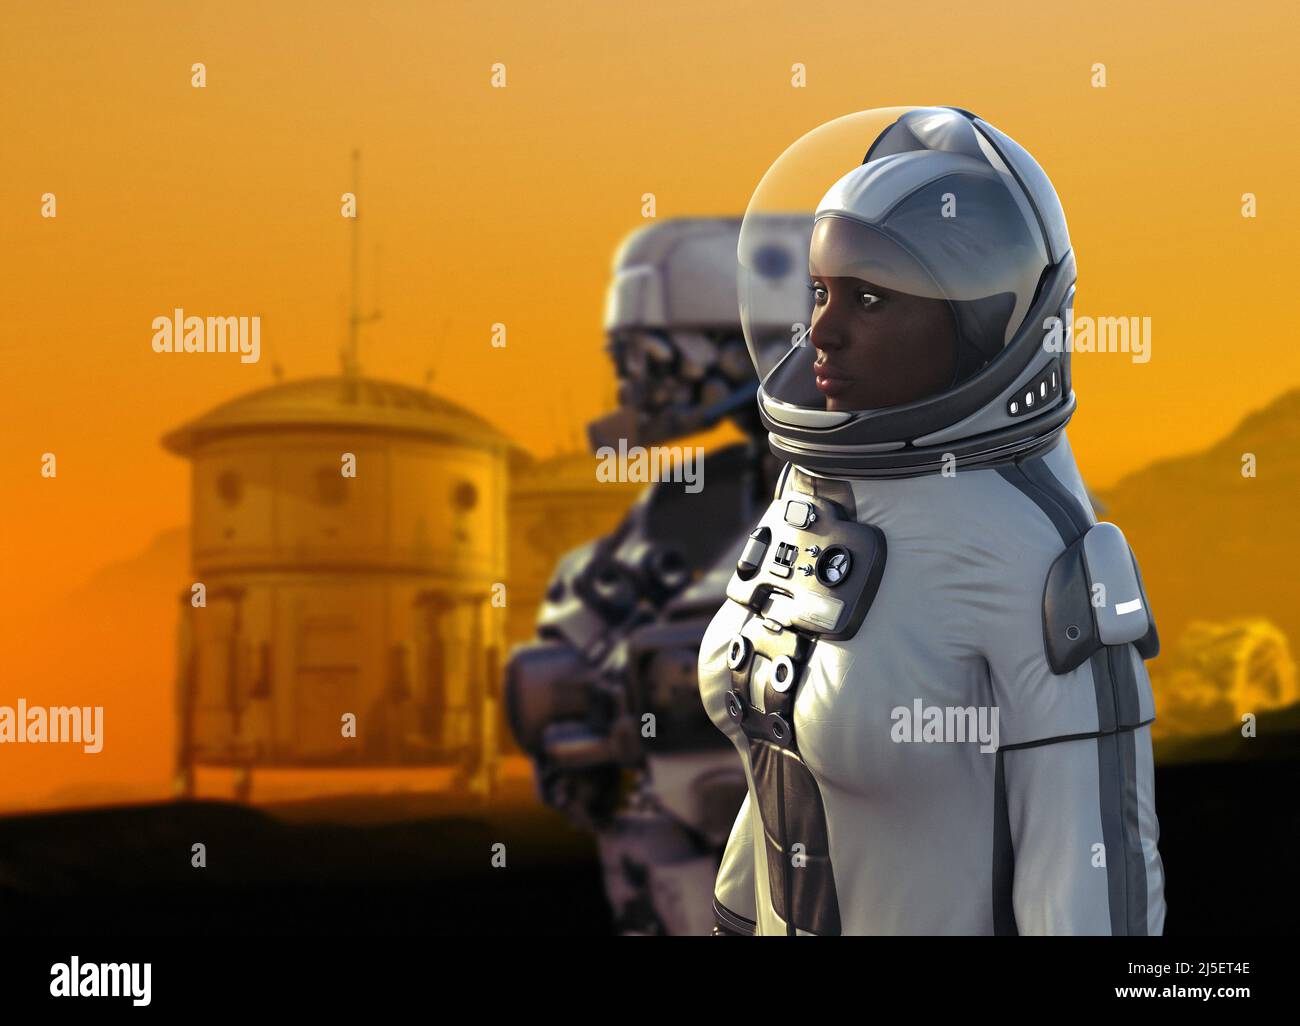 Astronaut with a robot on Mars, illustration Stock Photo